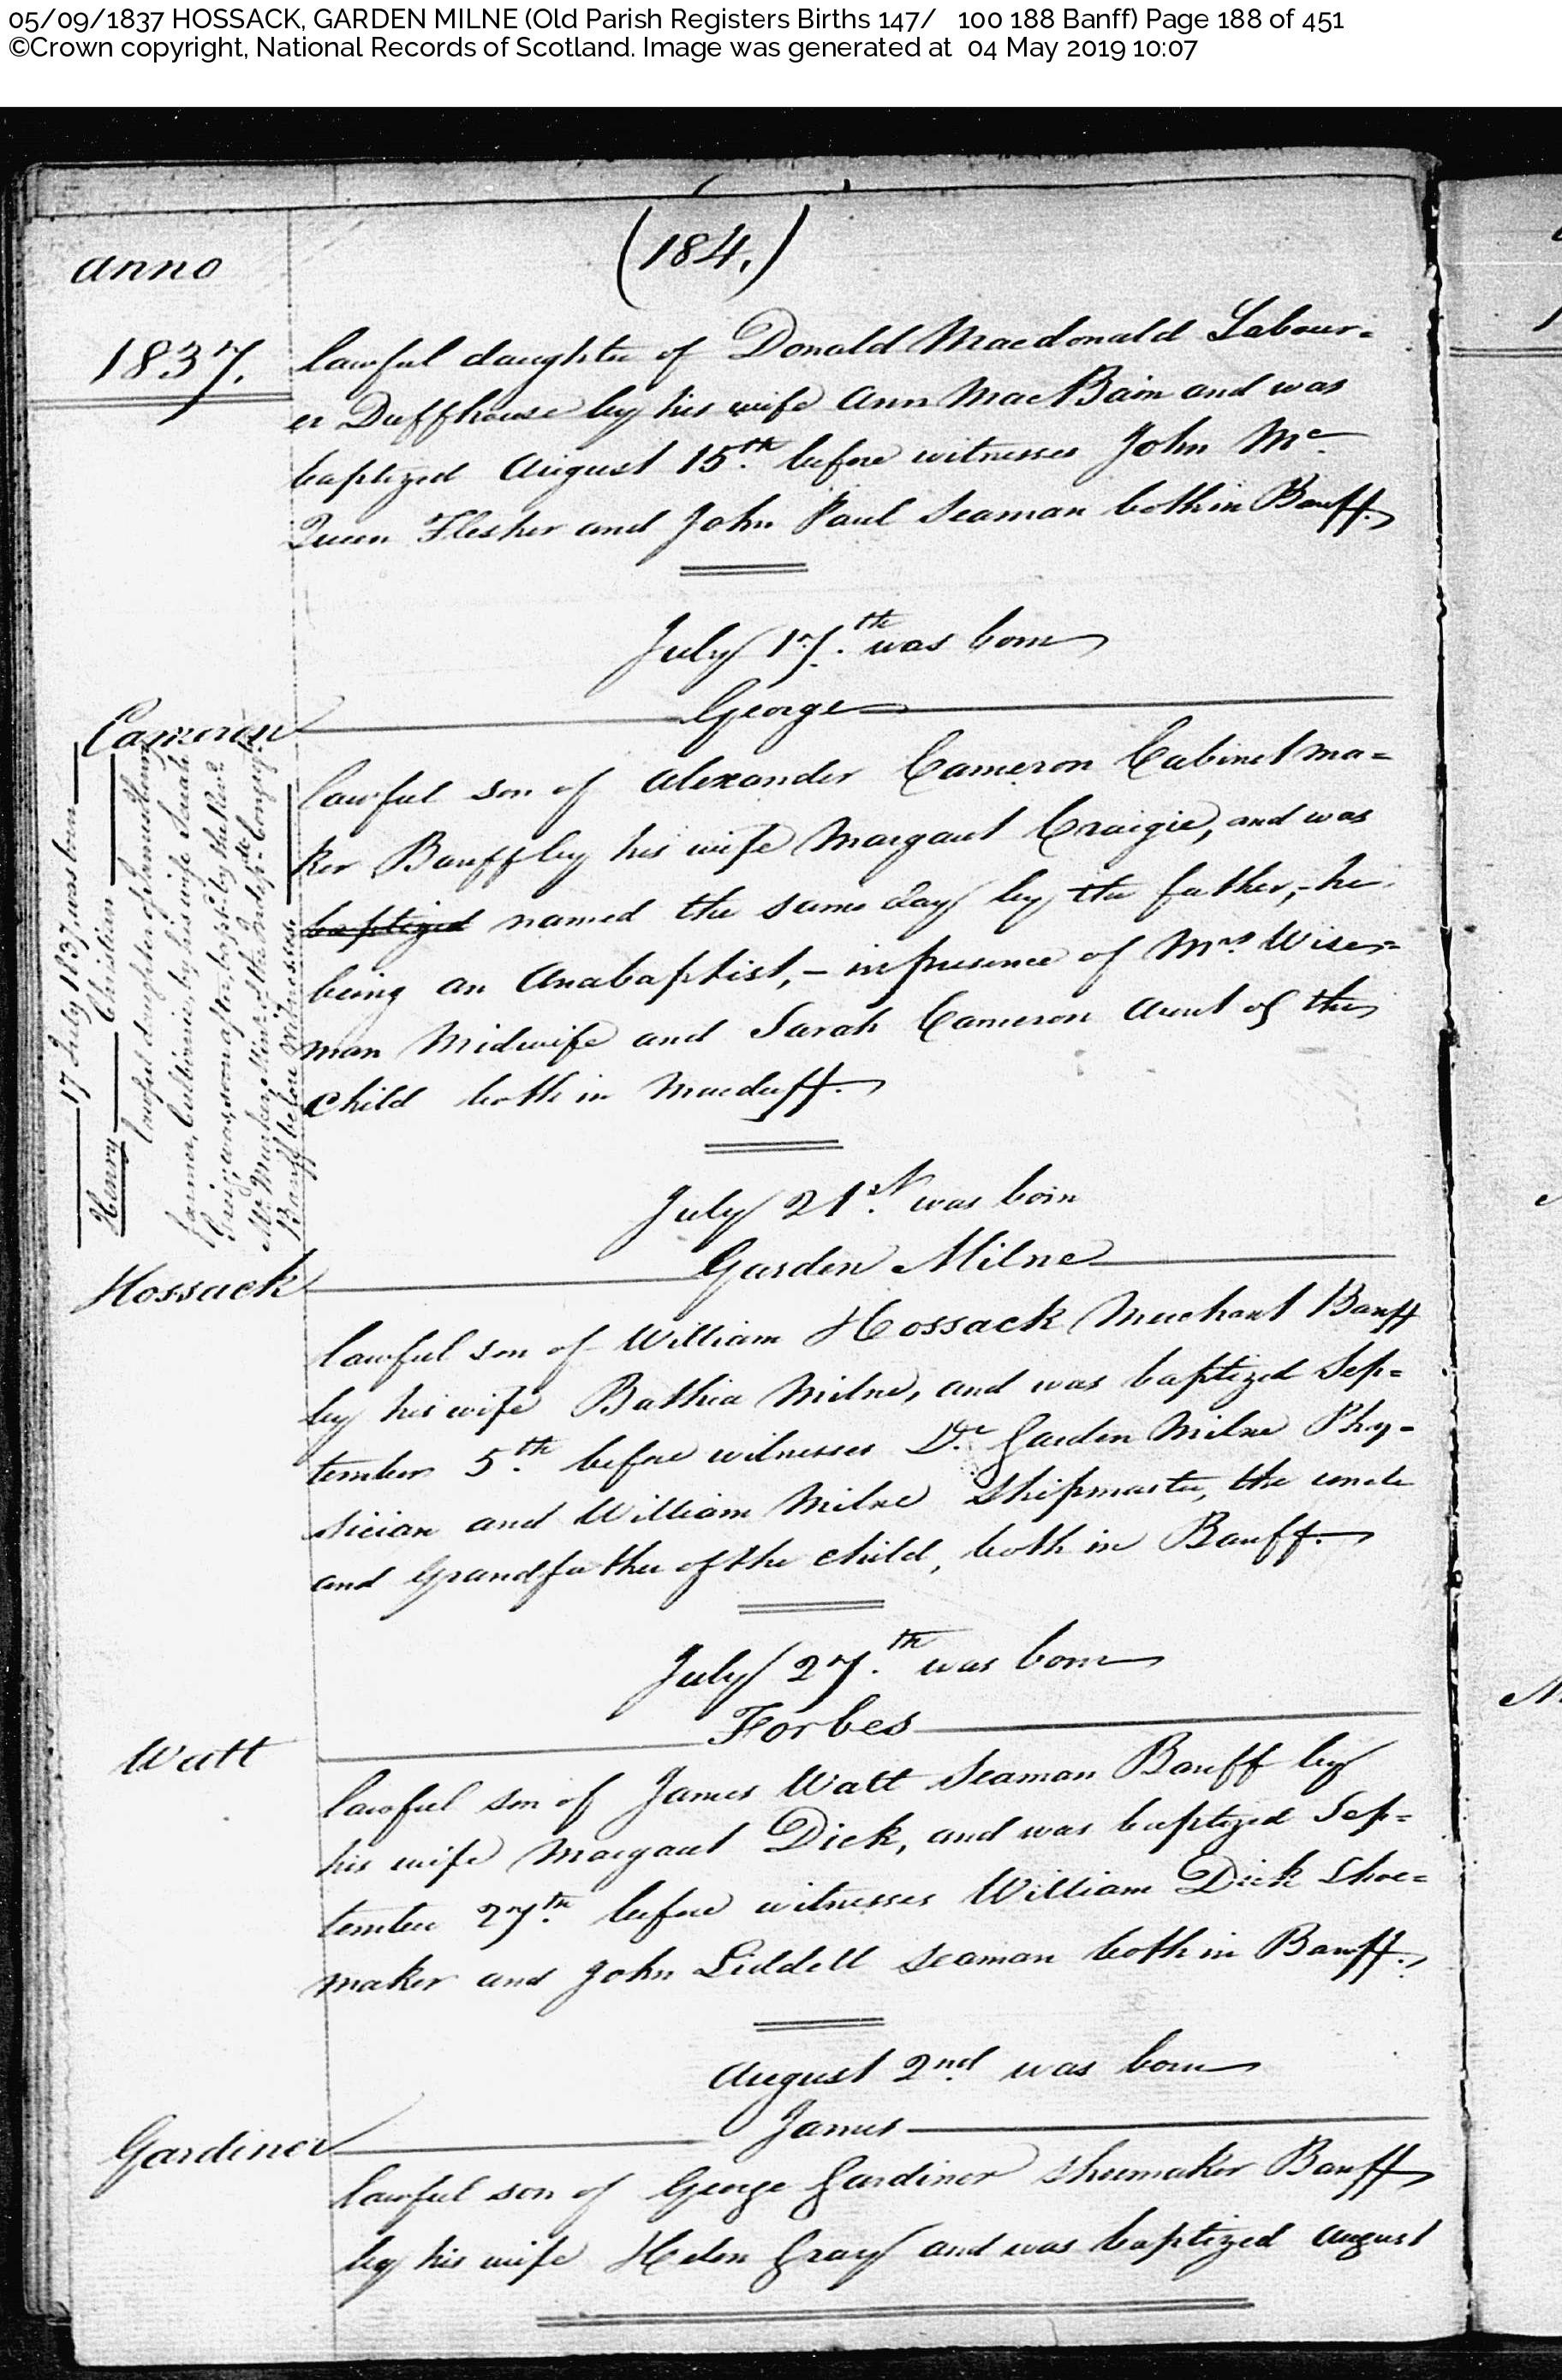 GardenMilneHossack_B1837 Banff, July 21, 1837